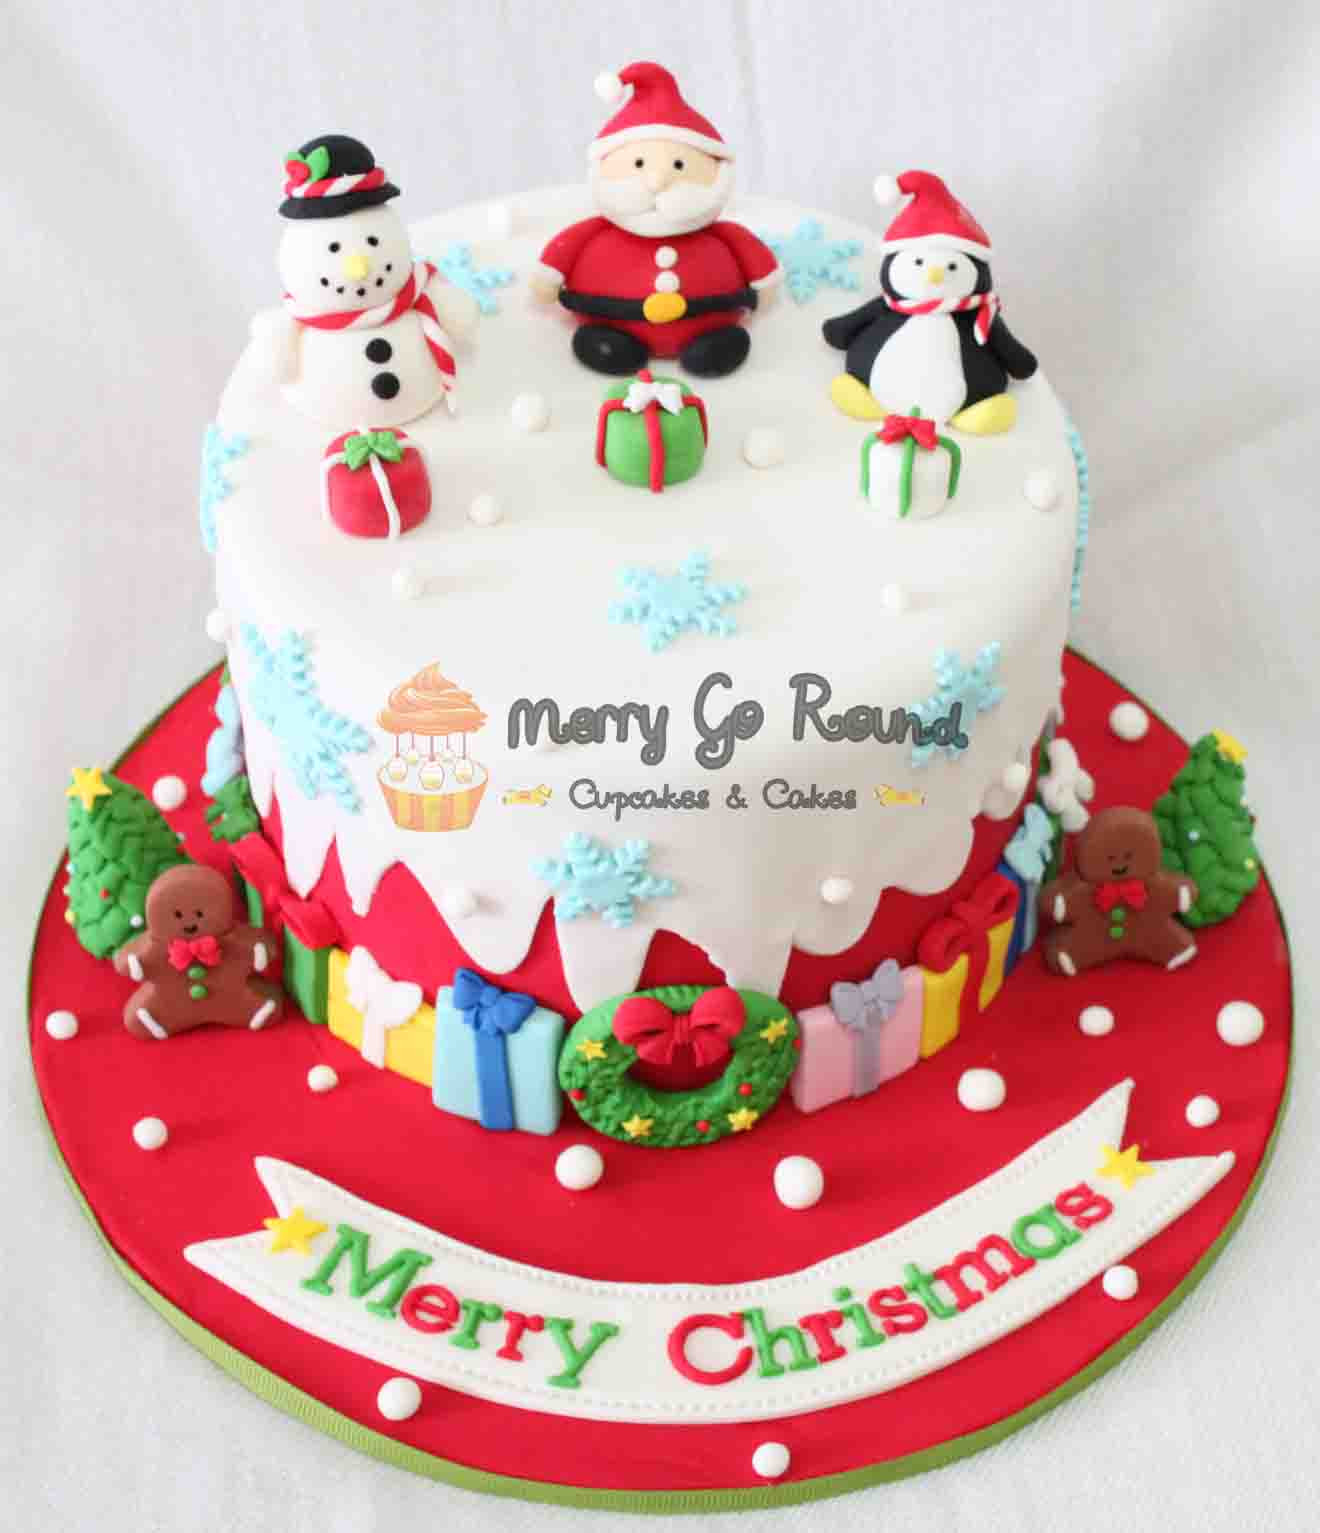 Merry Christmas Cakes
 Merry Go Round Cupcakes & Cakes Ho Ho Ho Santa Claus